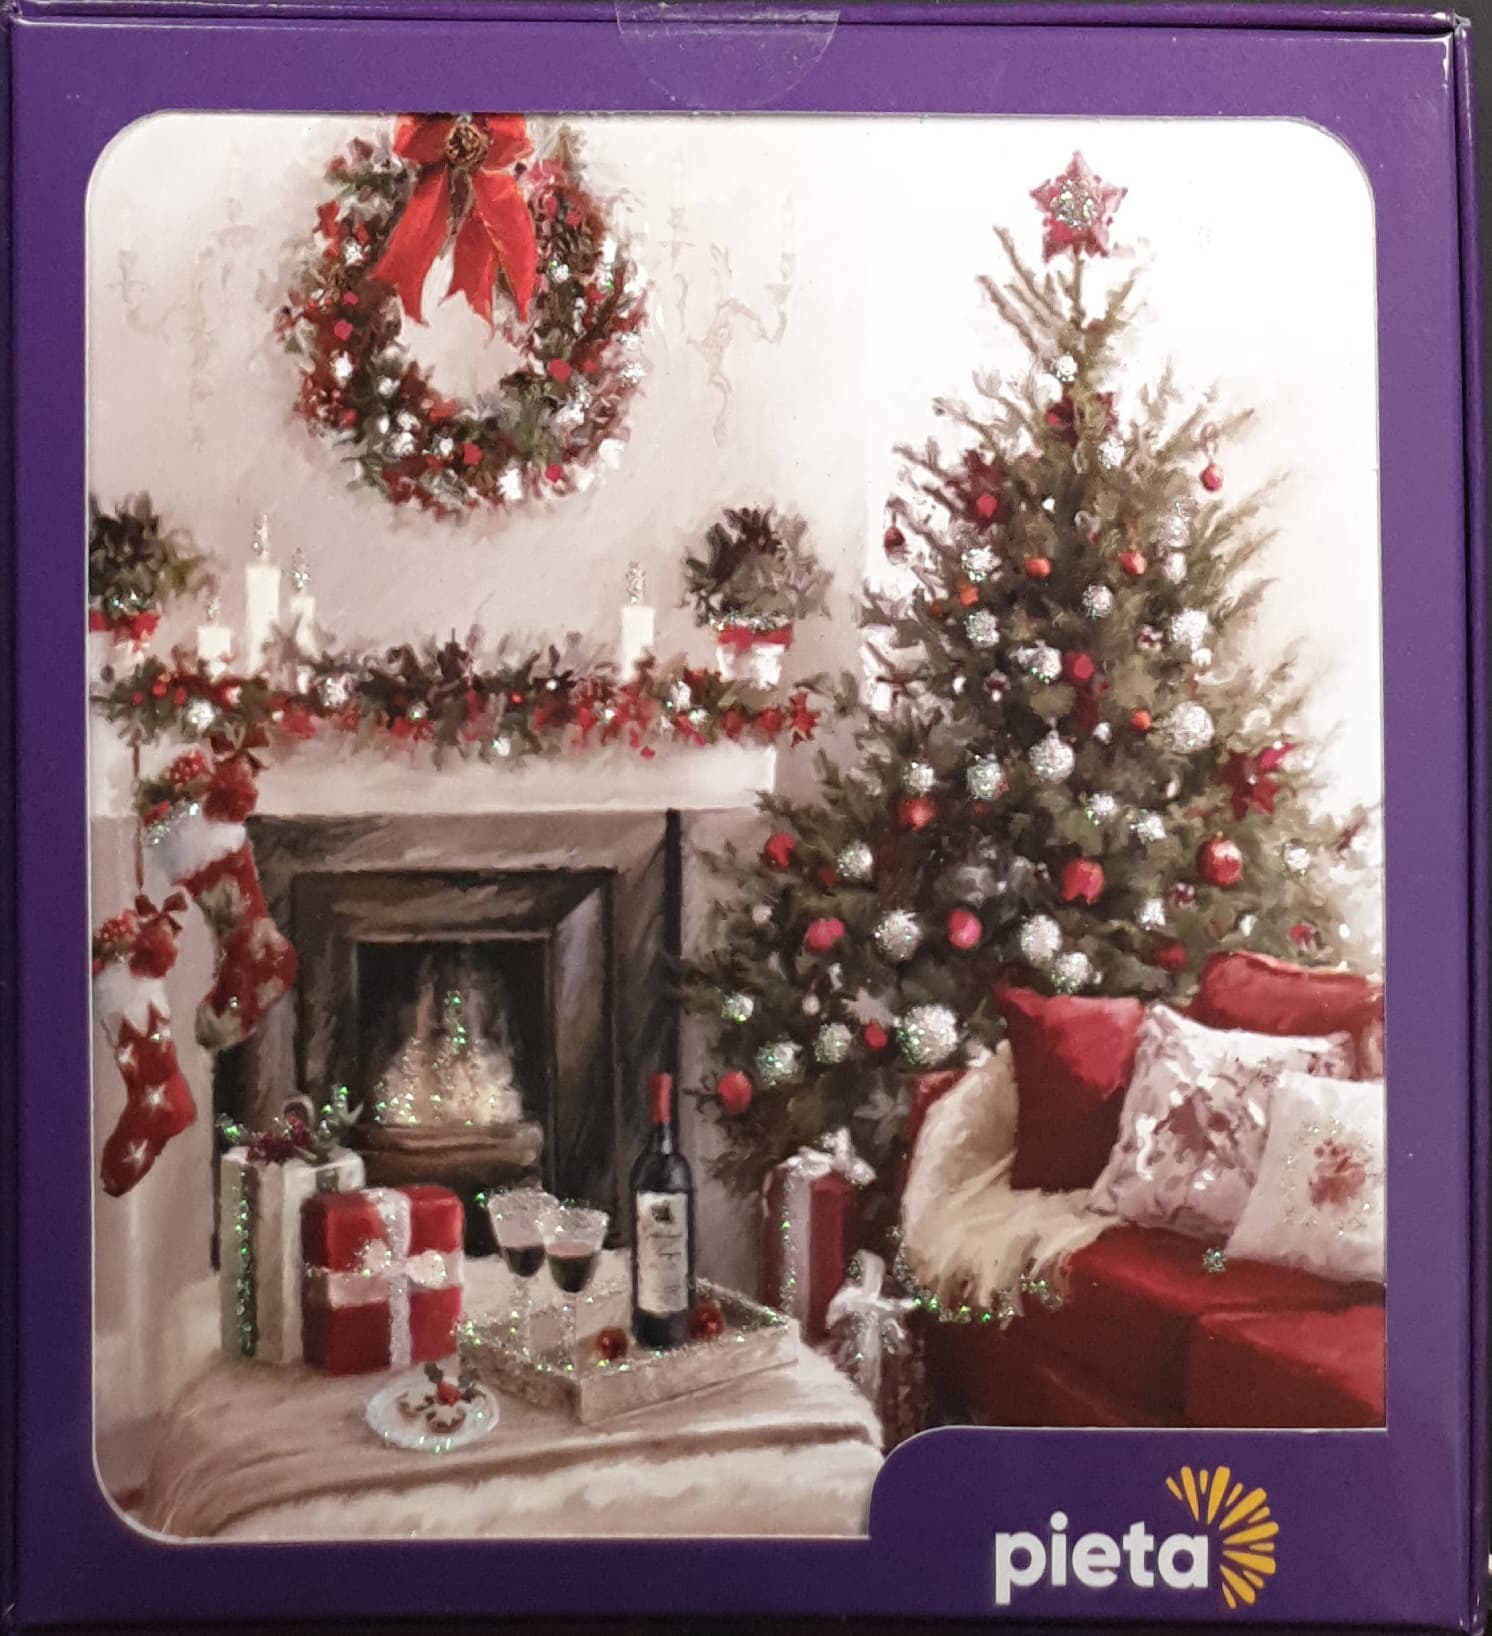 Charity Christmas Card (In Irish & English) - Box of 16 / Pieta - Decorated Christmas Tree in Living Room